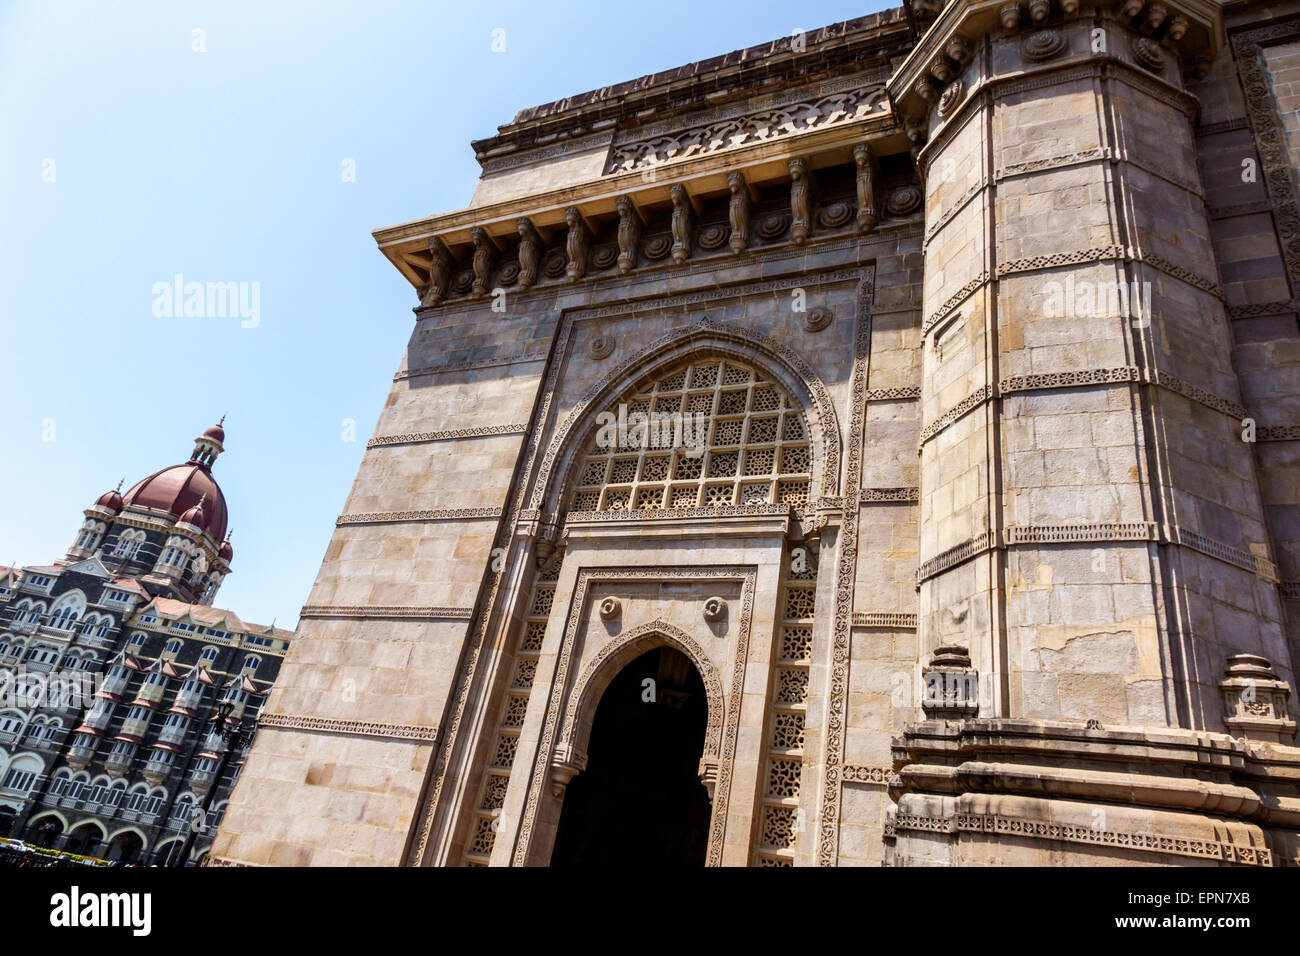 Mumbai India,Apollo Bandar,Colaba,Gateway of India,Indo-Saracenic style stone arch,The Taj Mahal Palace,hotel,India150227137 Stock Photo